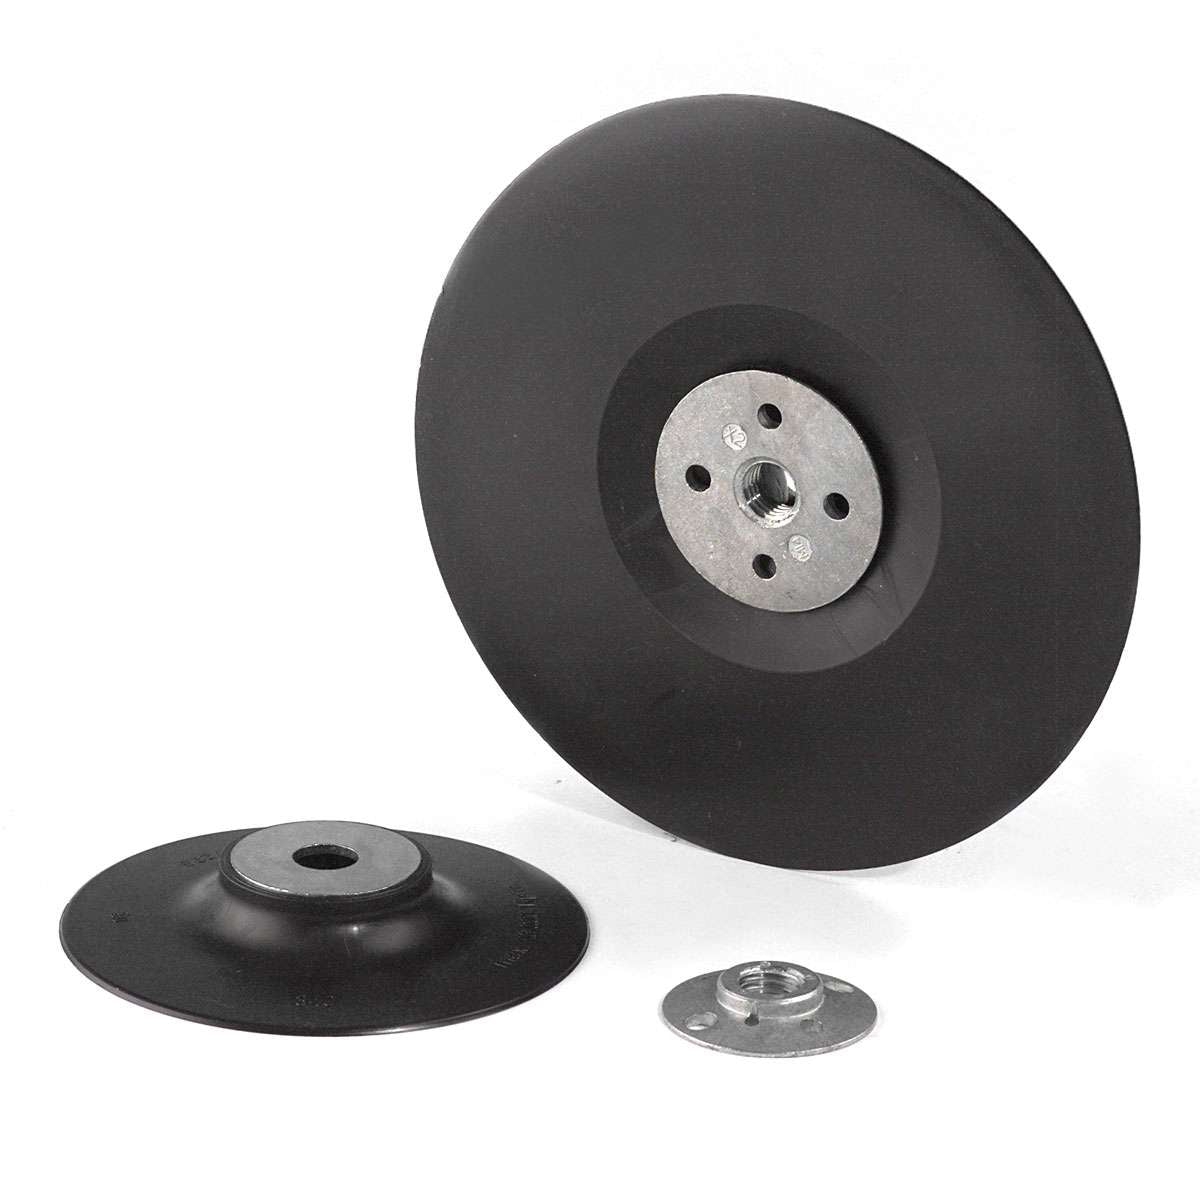 Backing pad for fiber discs PSF Liscio Rosver - Conf.1pz